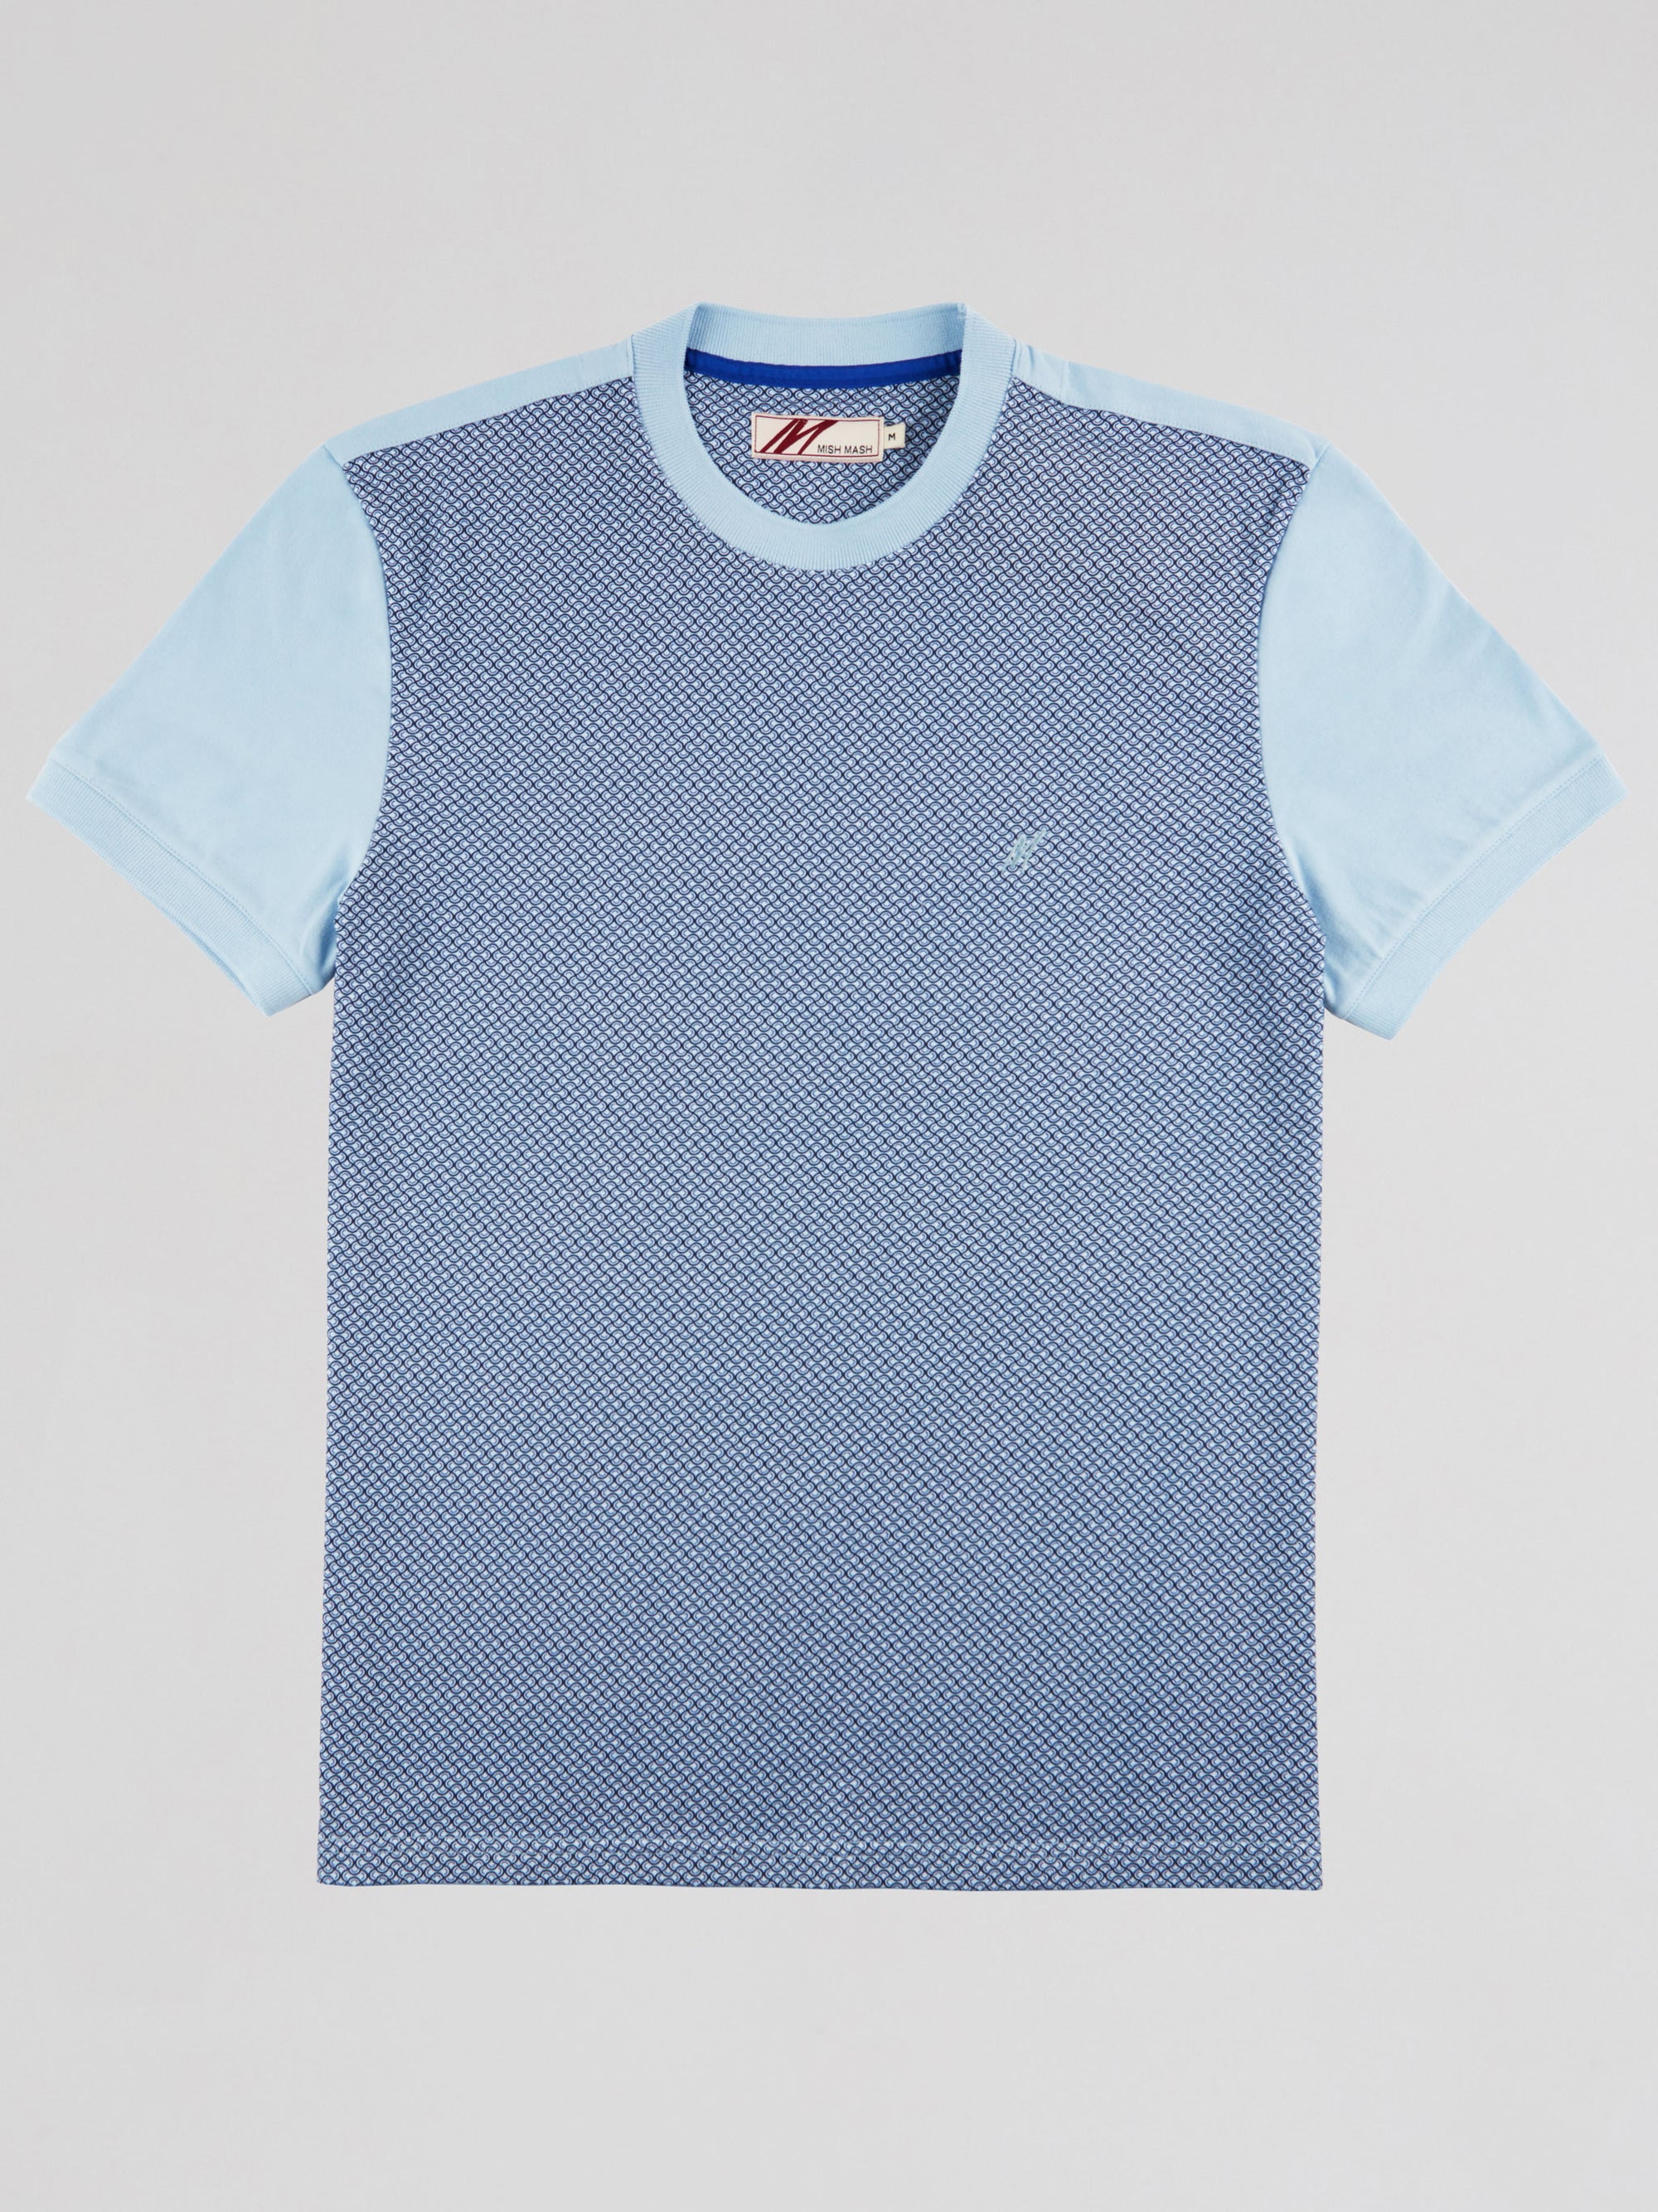 albatross-sky-blue-printed-mens-jersey-short-sleeve-tshirt-mish-mash